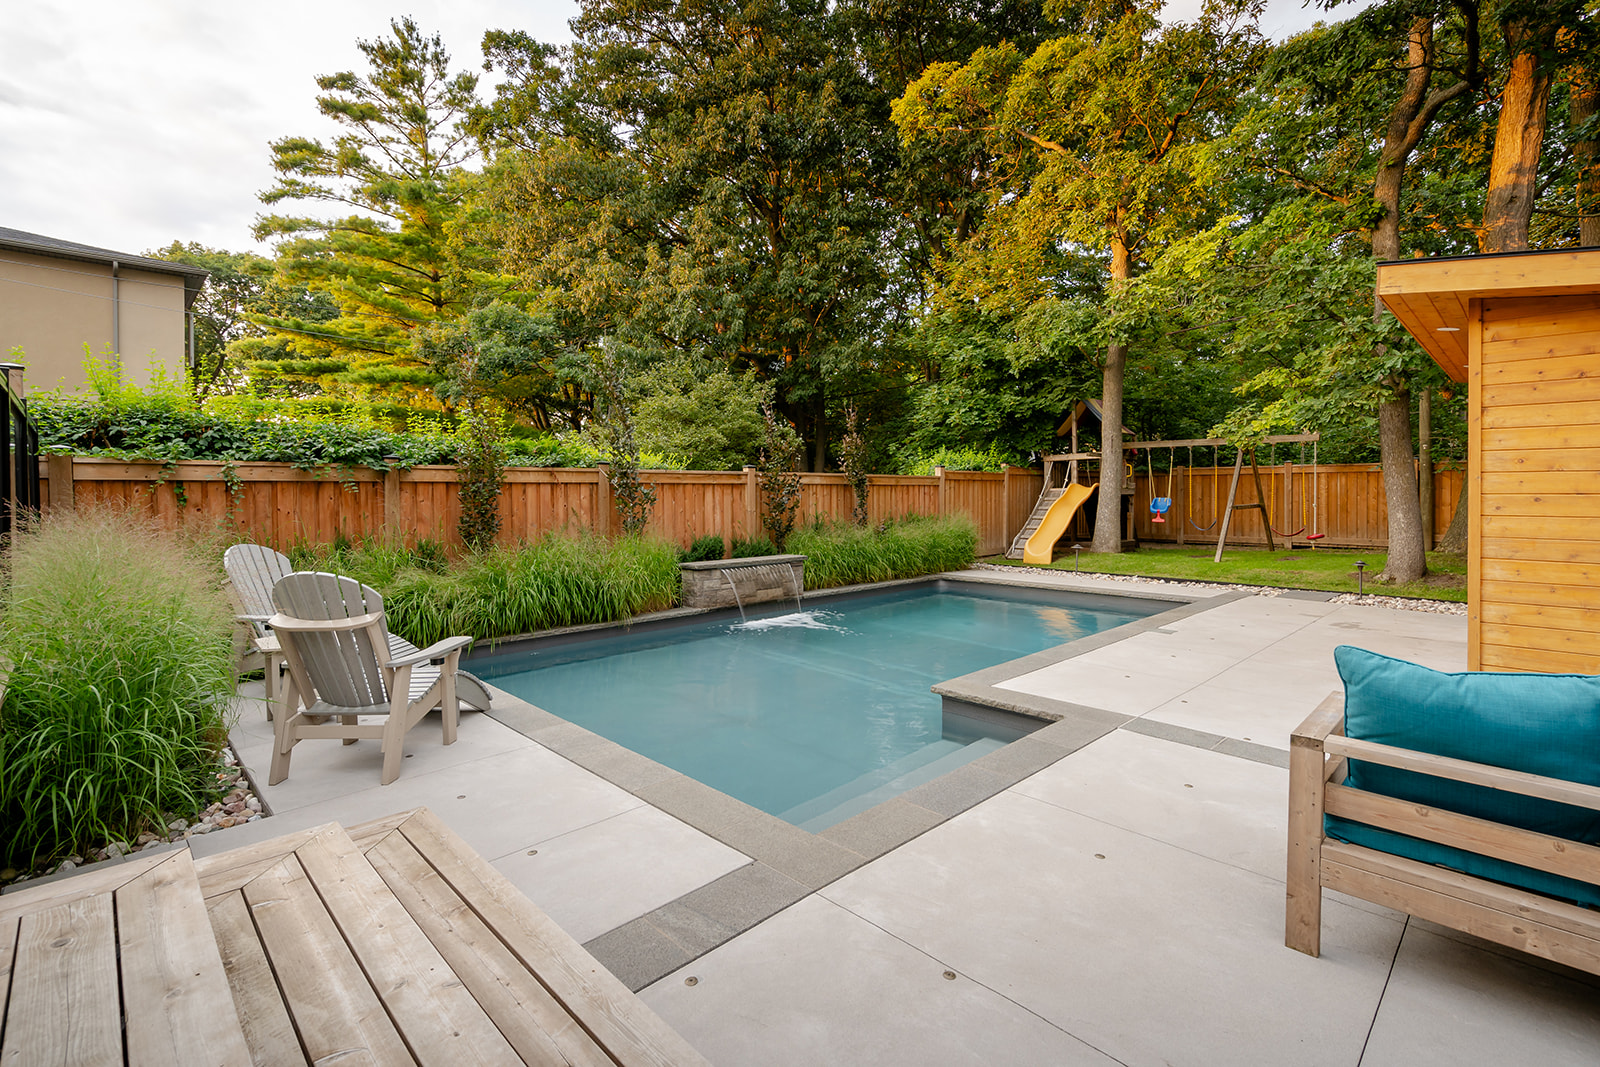 An inground pool in the backyard.